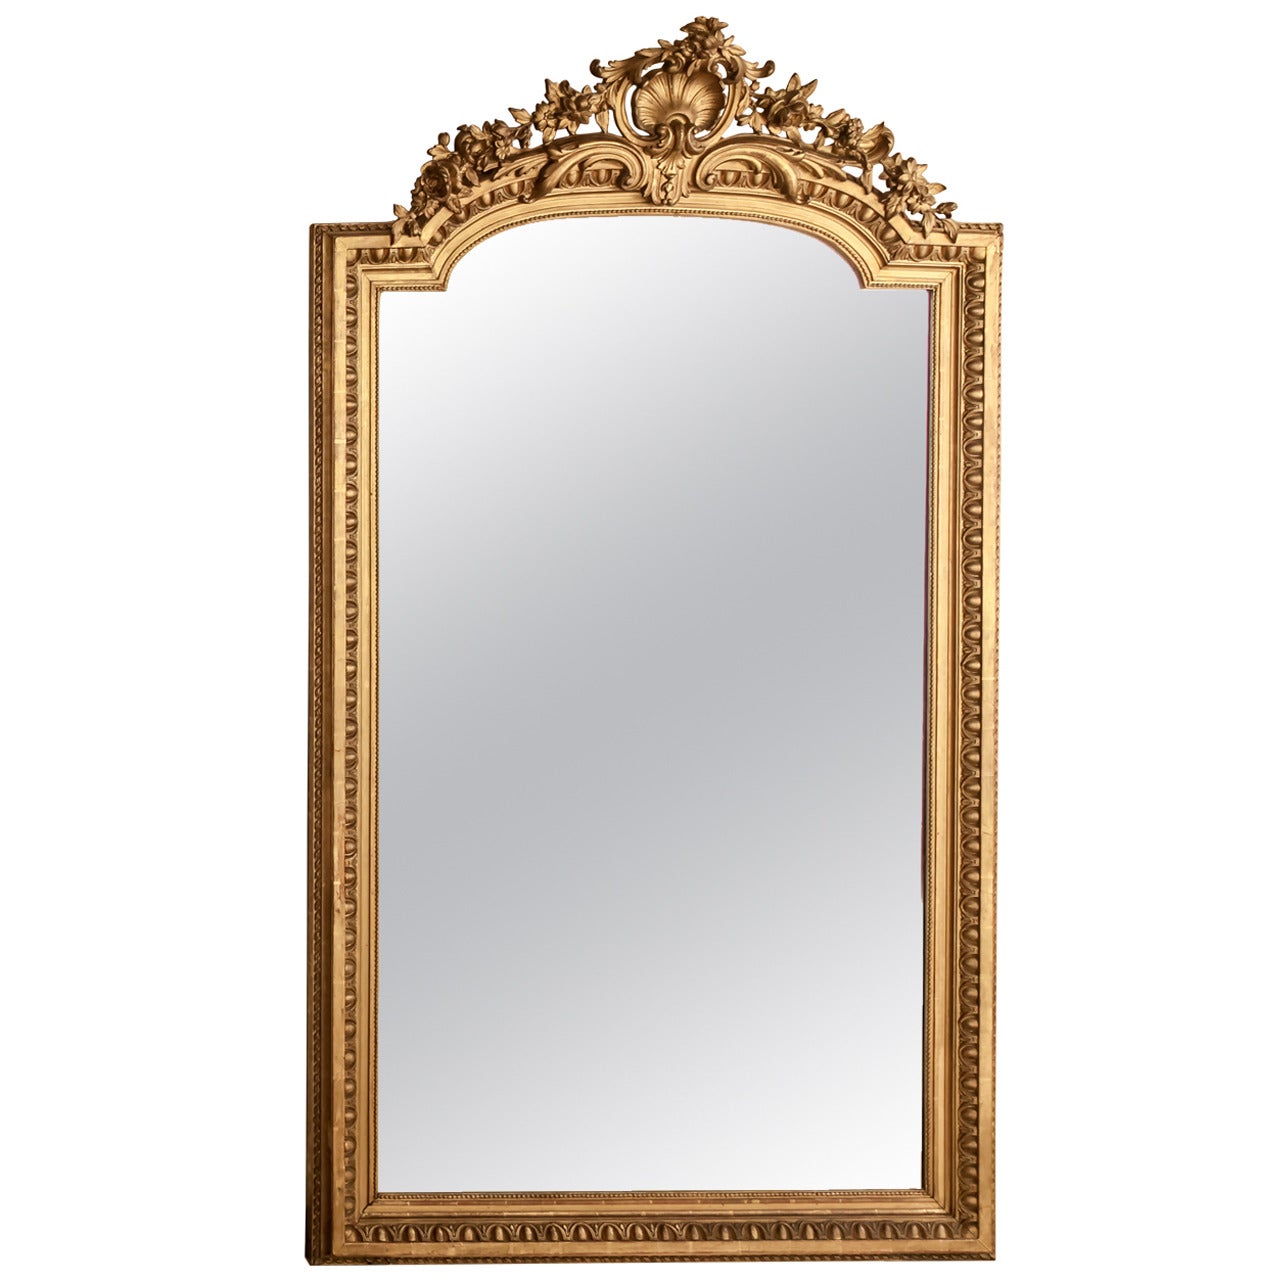 French Regence Gilded Mirror